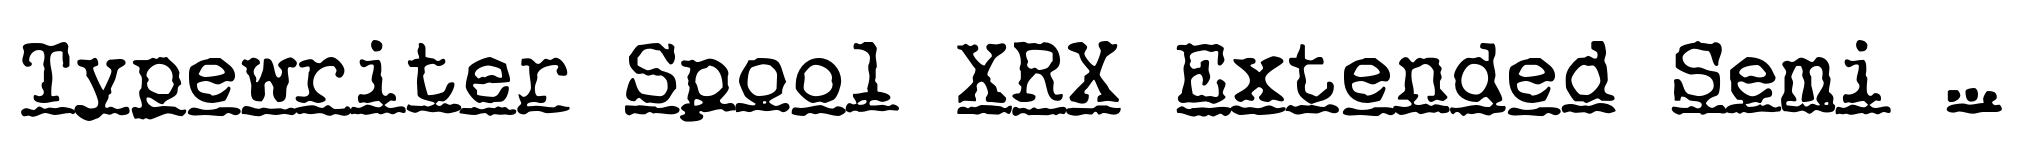 Typewriter Spool XRX Extended Semi Bold Italic image